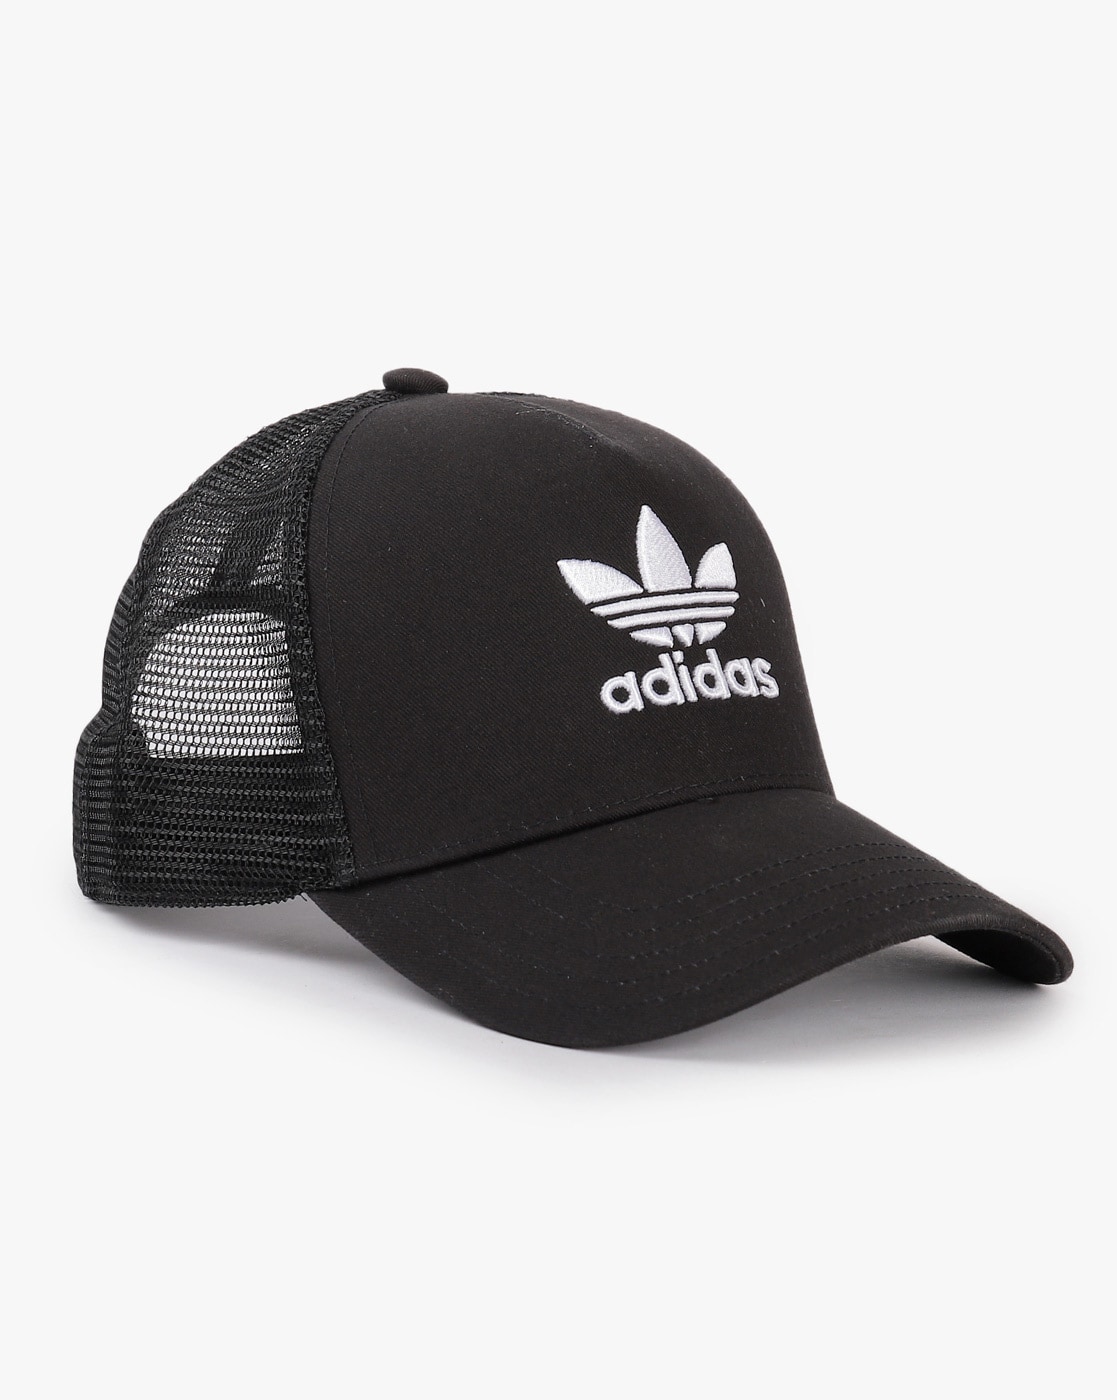 Caps & Hats Men by Adidas Originals Online | Ajio.com